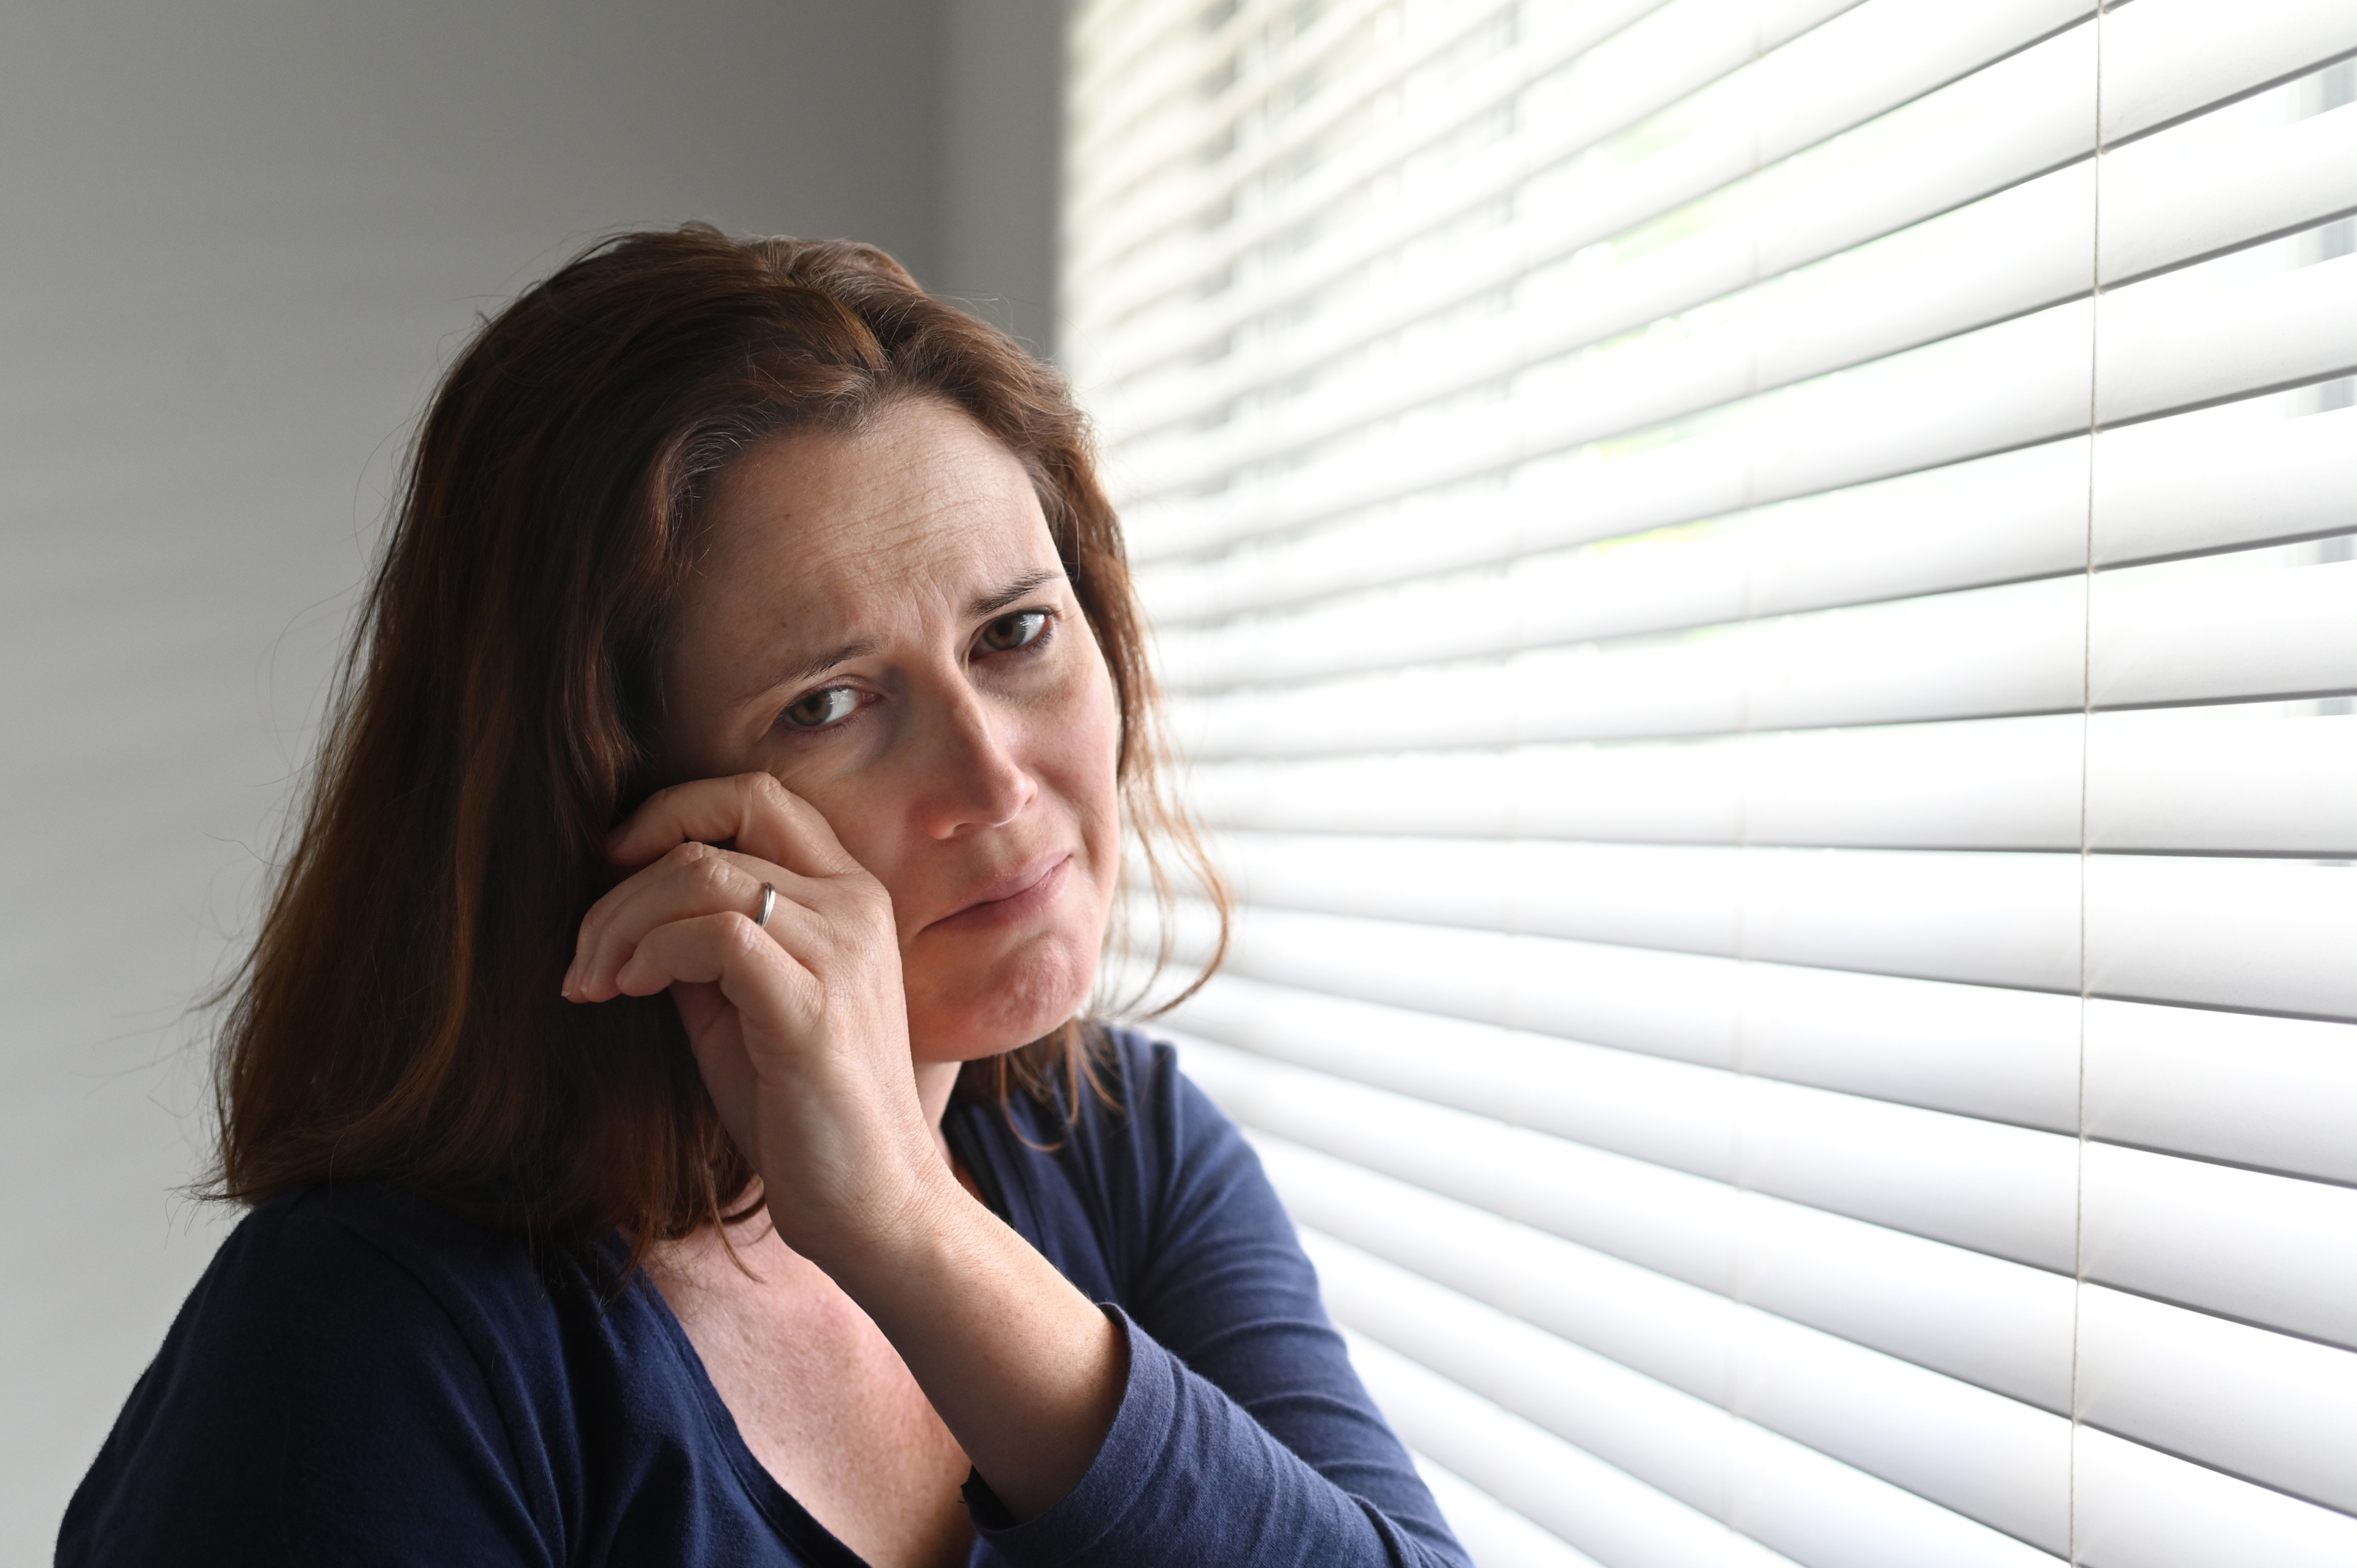 Sad crying woman near the window | Source: Shutterstock.com